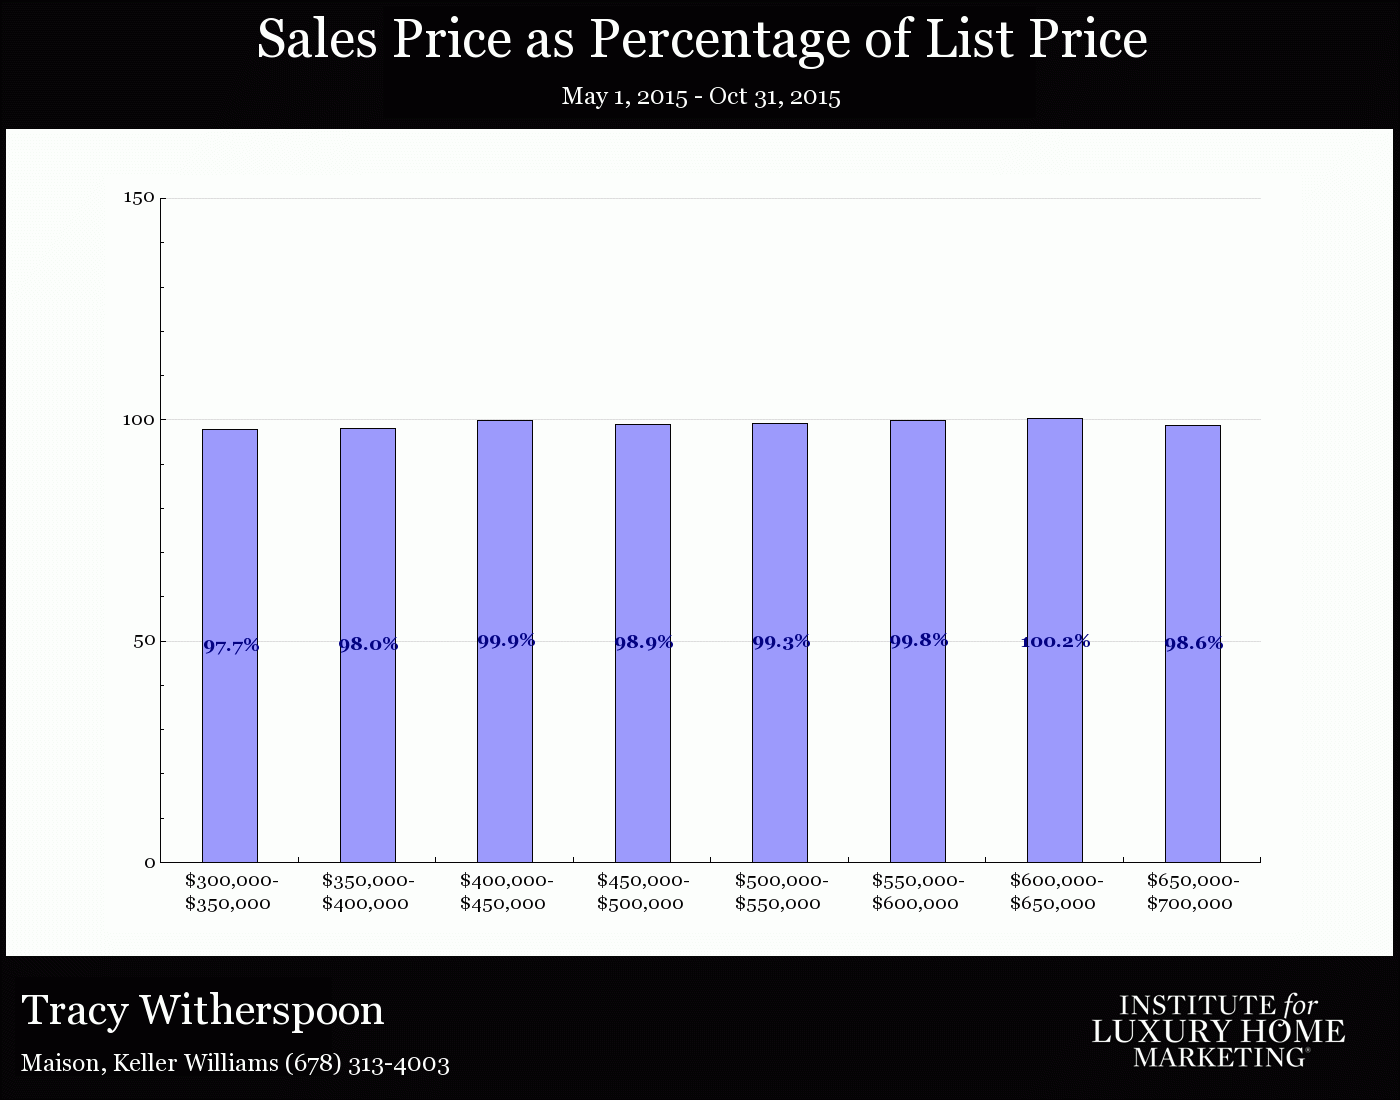 SalesPriceas a % of list price.gif